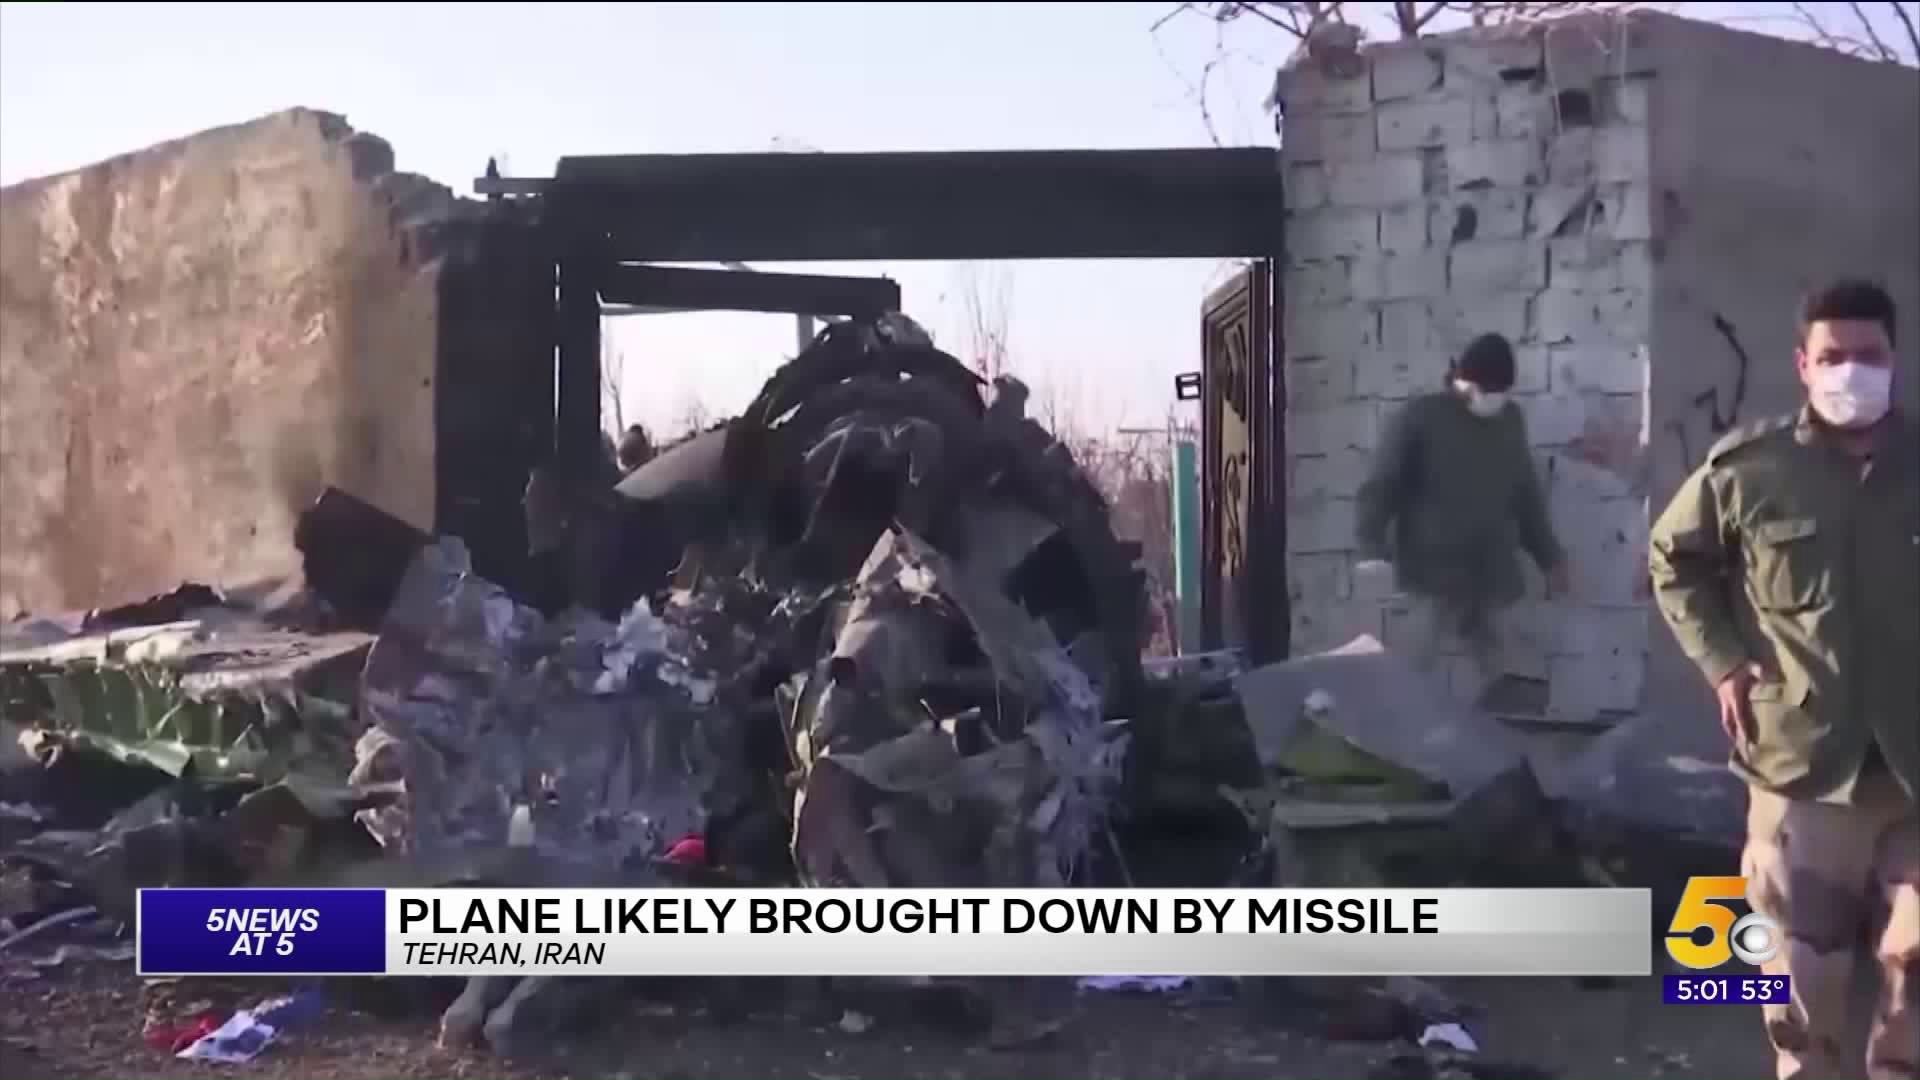 U.S. Officials Confident Iran Shot Down Passenger Jet